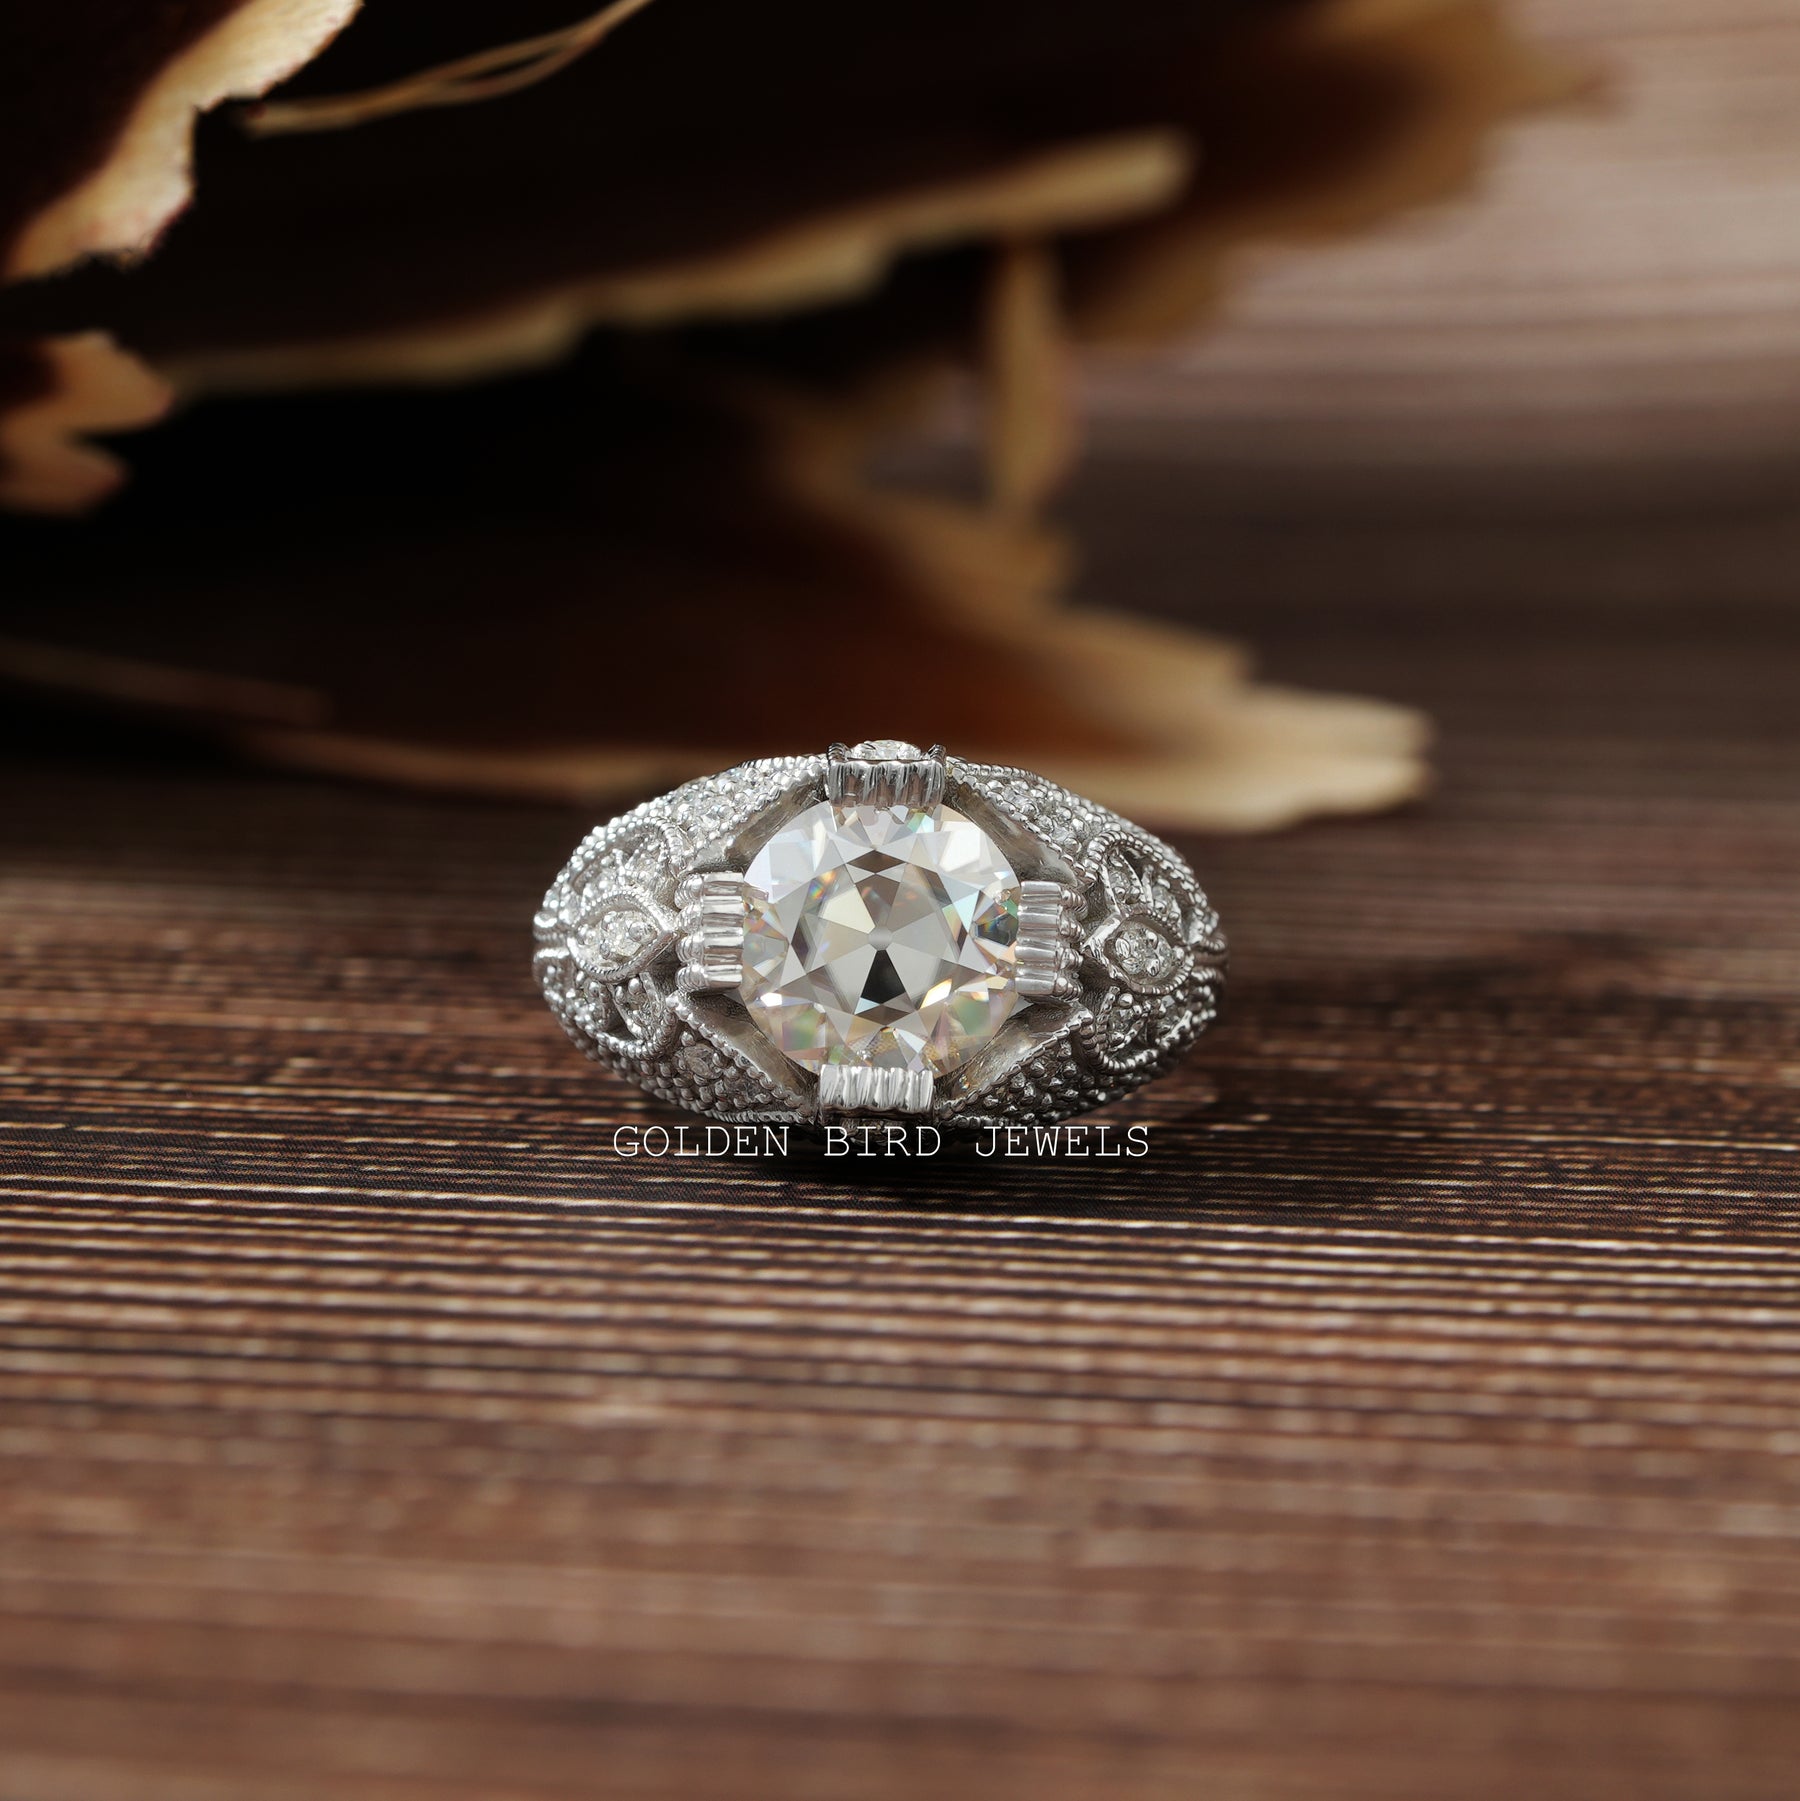 [An antique diamond ring on a wooden table]-[Golden Bird Jewels]